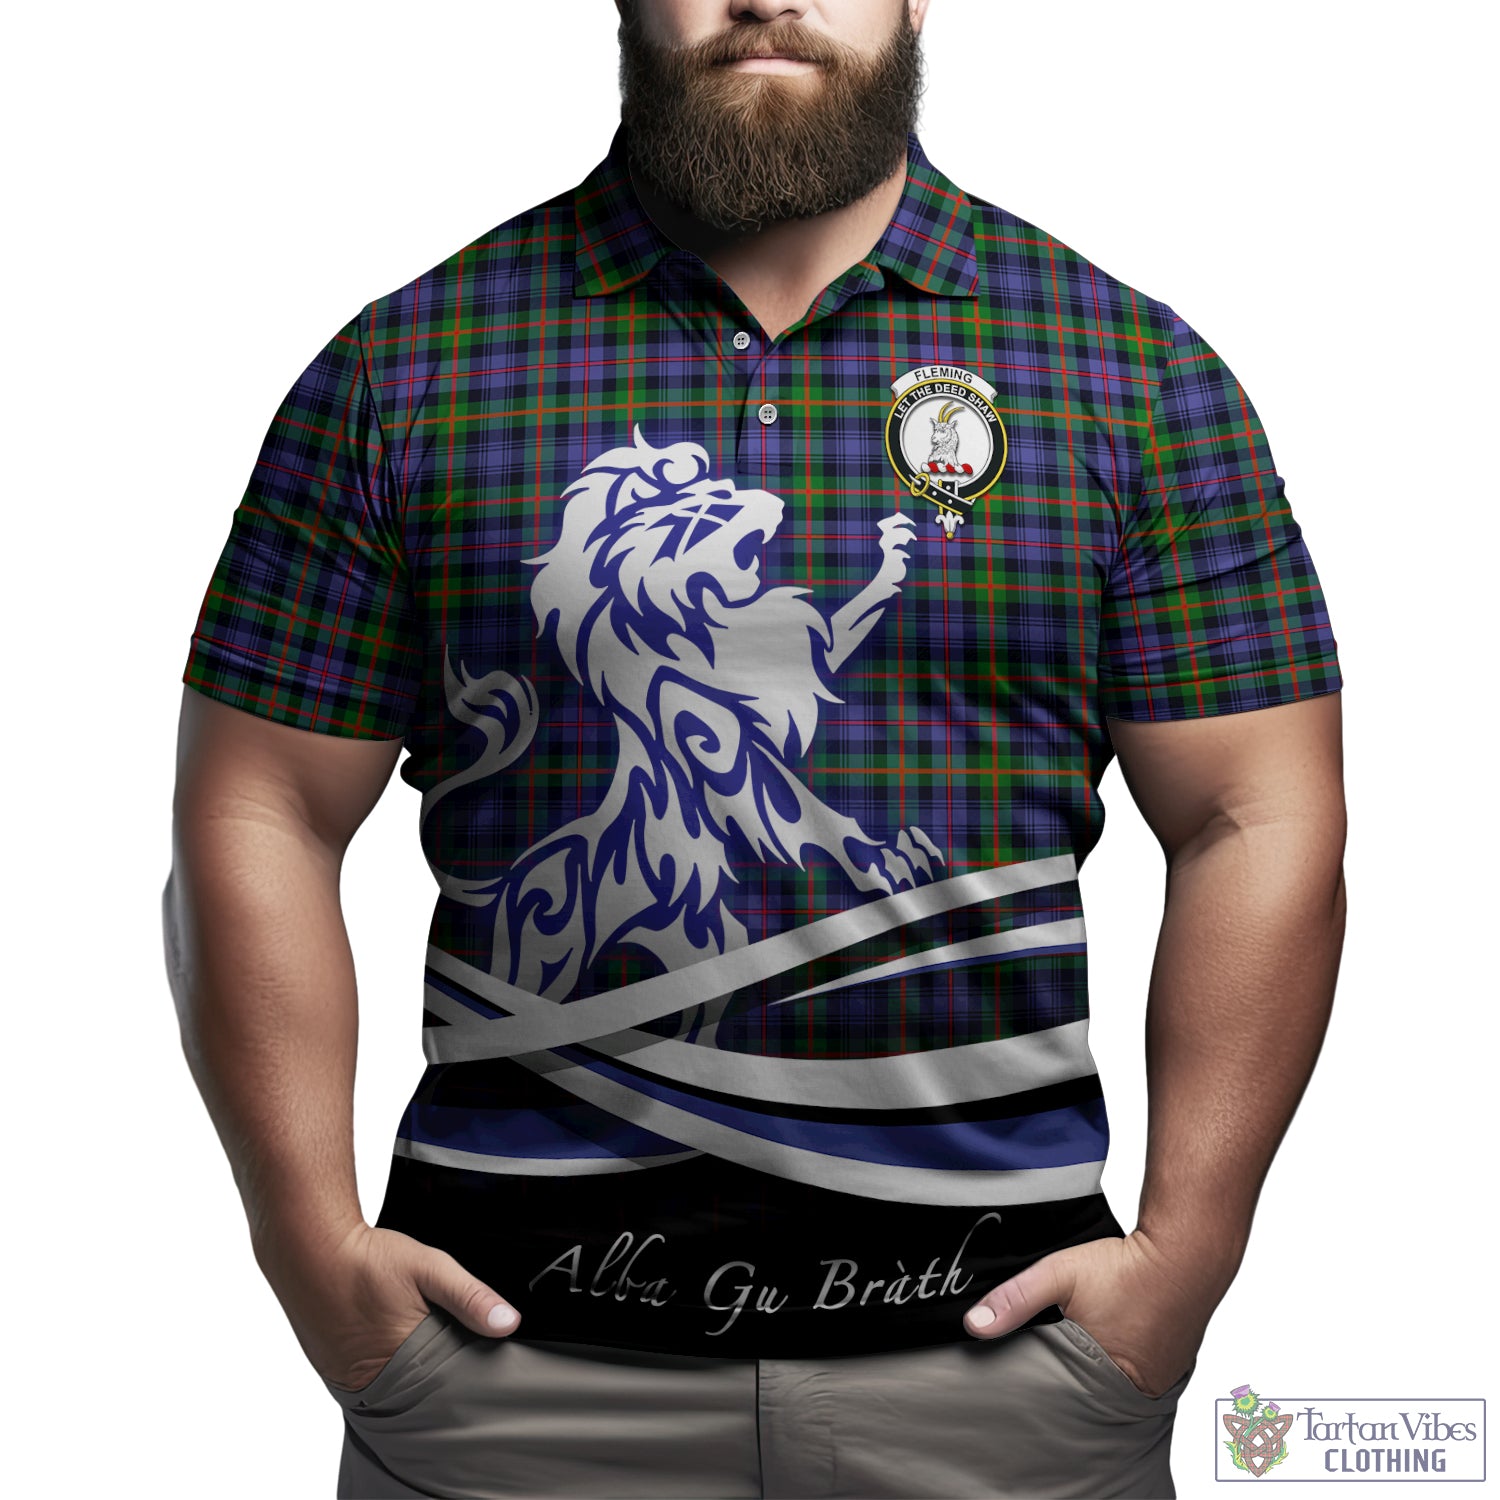 fleming-tartan-polo-shirt-with-alba-gu-brath-regal-lion-emblem